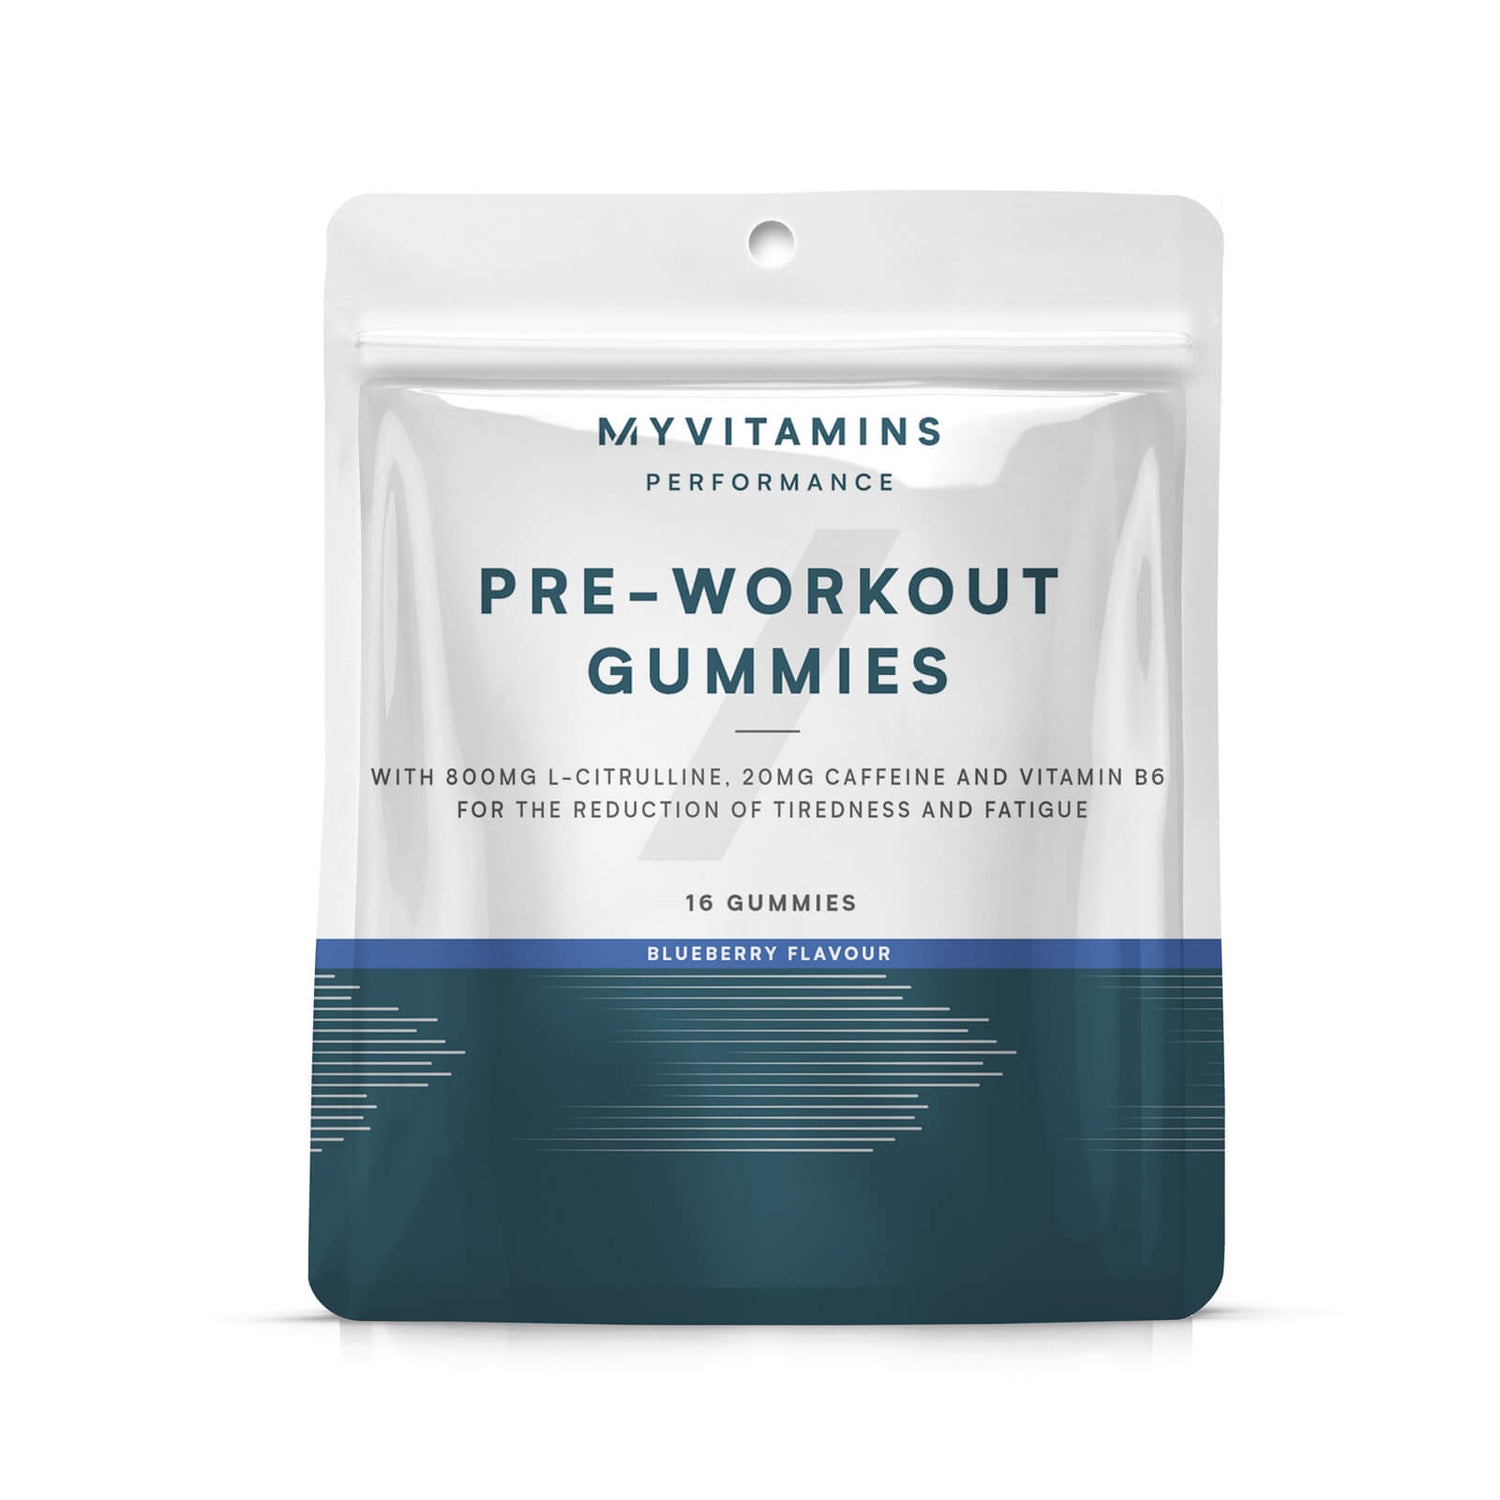 Pre-Workout Gummies - Sample Pouch - Blåbær